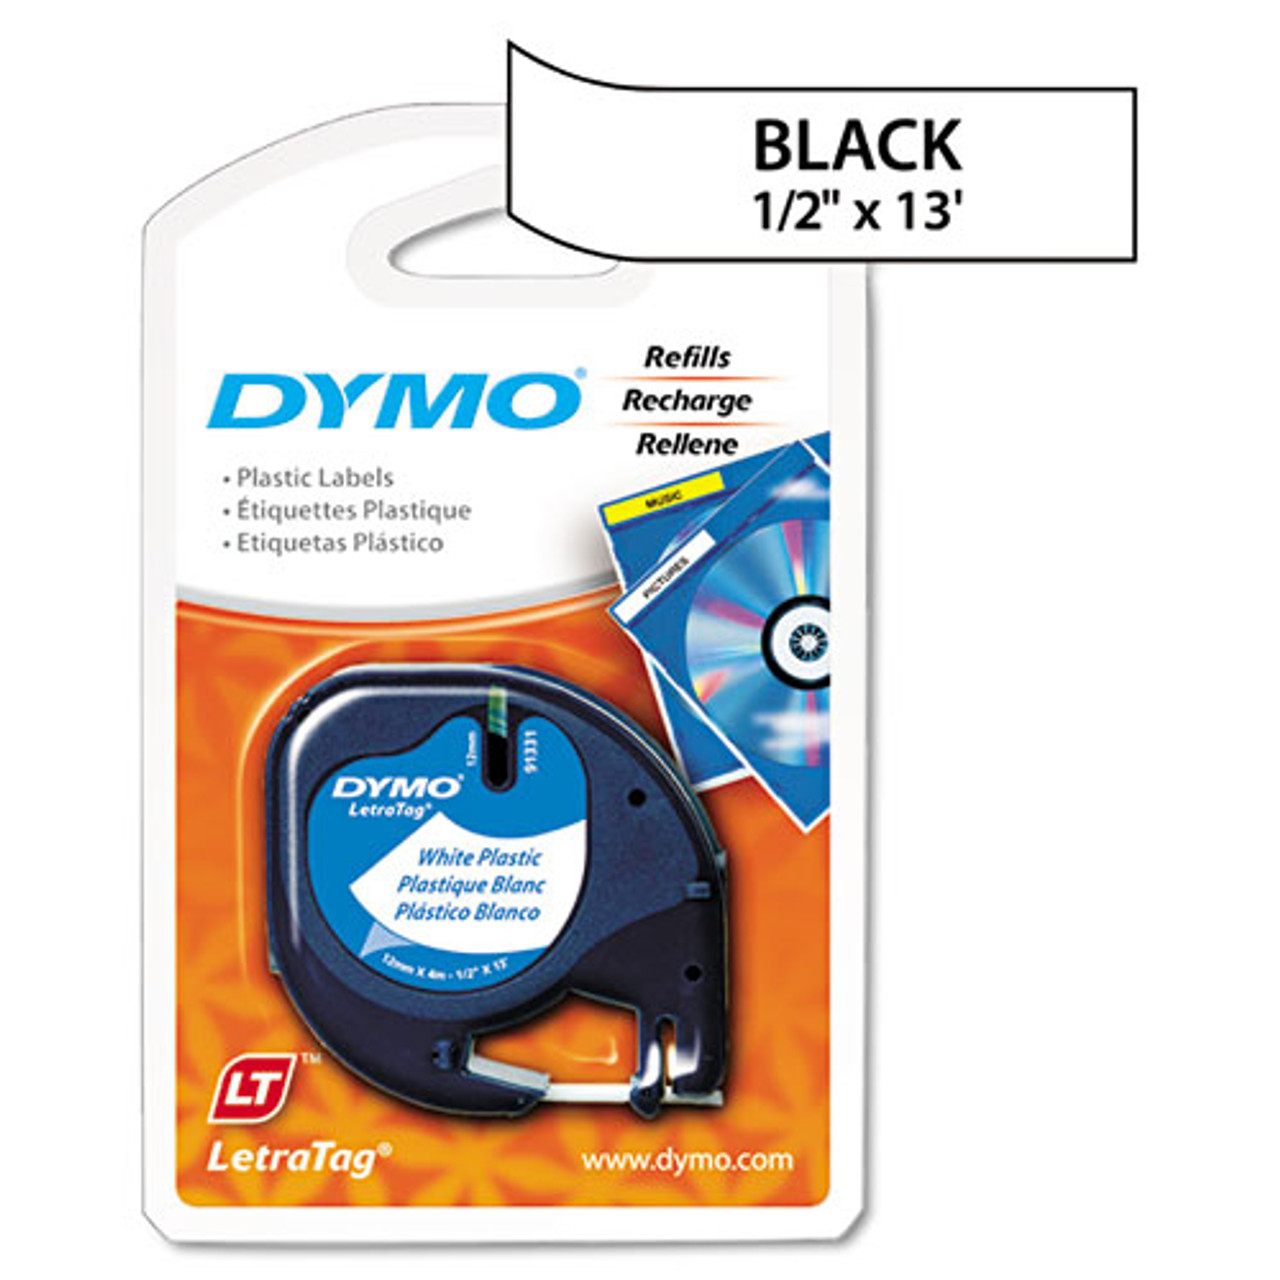 Dymo 91331 1/2 White Plastic Label Machine Tape